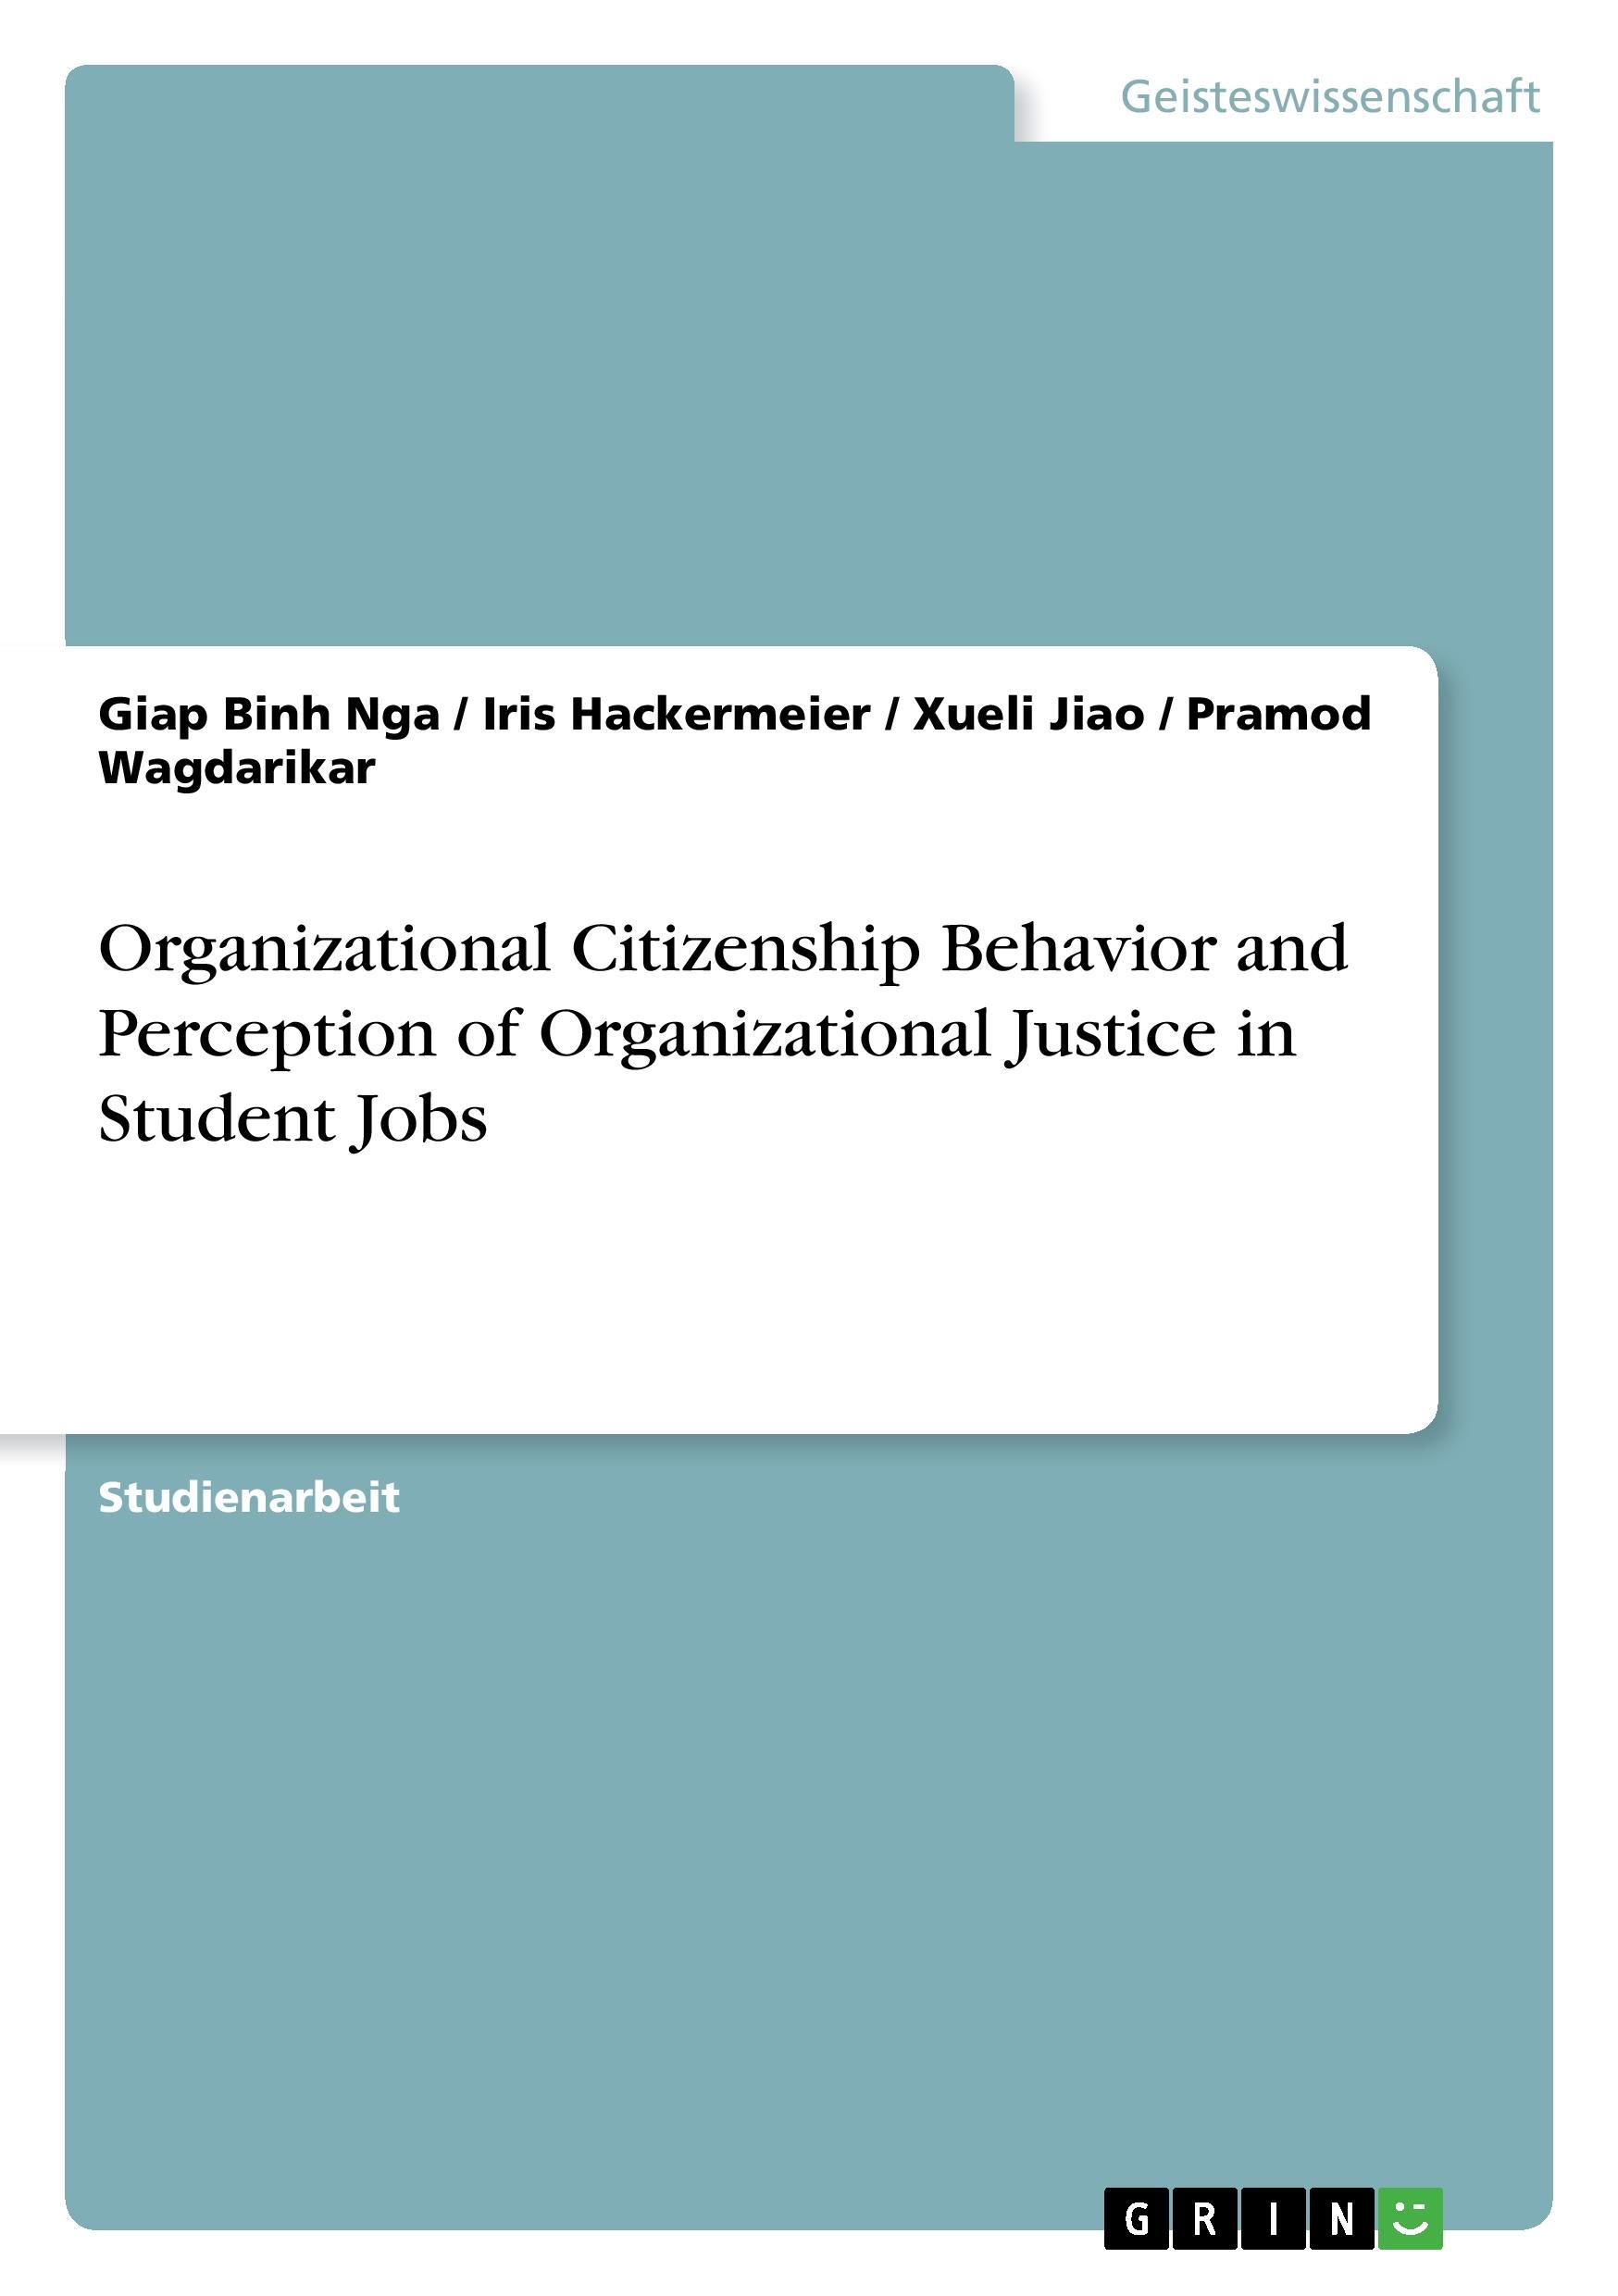 Organizational Citizenship Behavior and Perception of Organizational Justice in Student Jobs - Binh Nga, Giap Hackermeier, Iris Jiao, Xueli Wagdarikar, Pramod